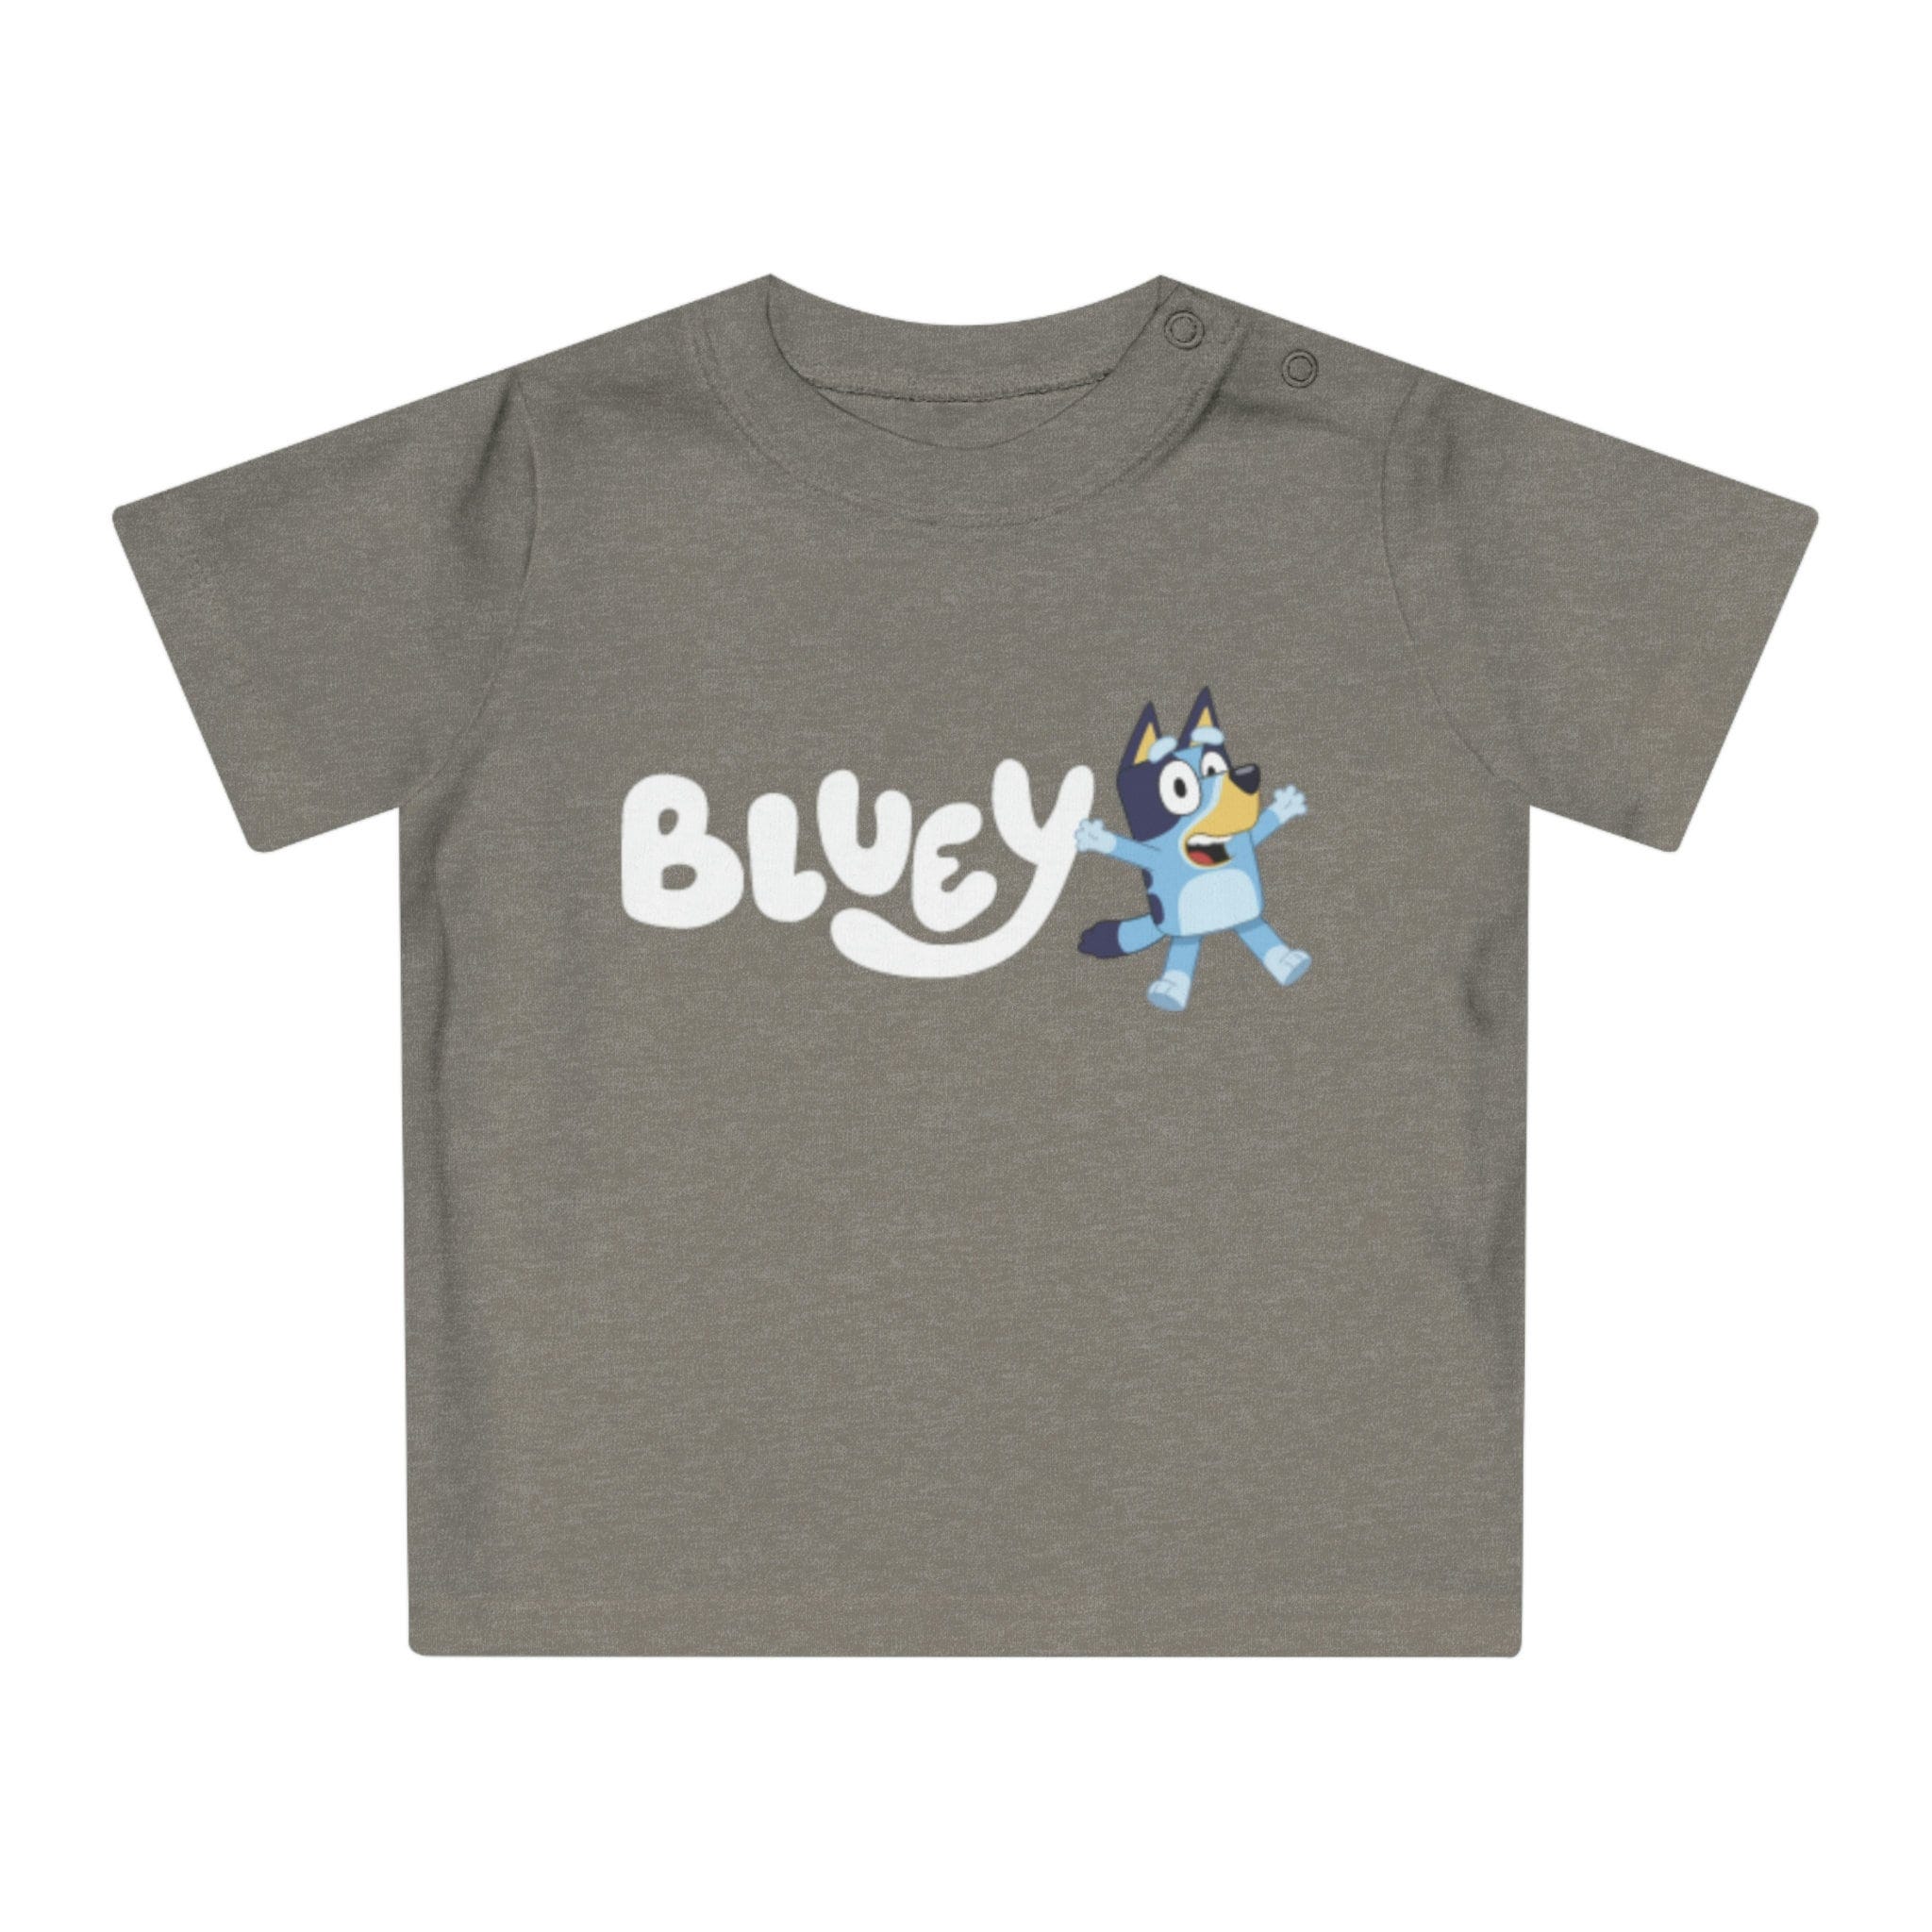 Bluey Baby Tshirt, Bluey Tshirt, Baby Tee, Bluey Tee, Gifts for Baby, Baby Shower Gifts, Bluey Heeler Tshirt, Cartoon Dog Shirt